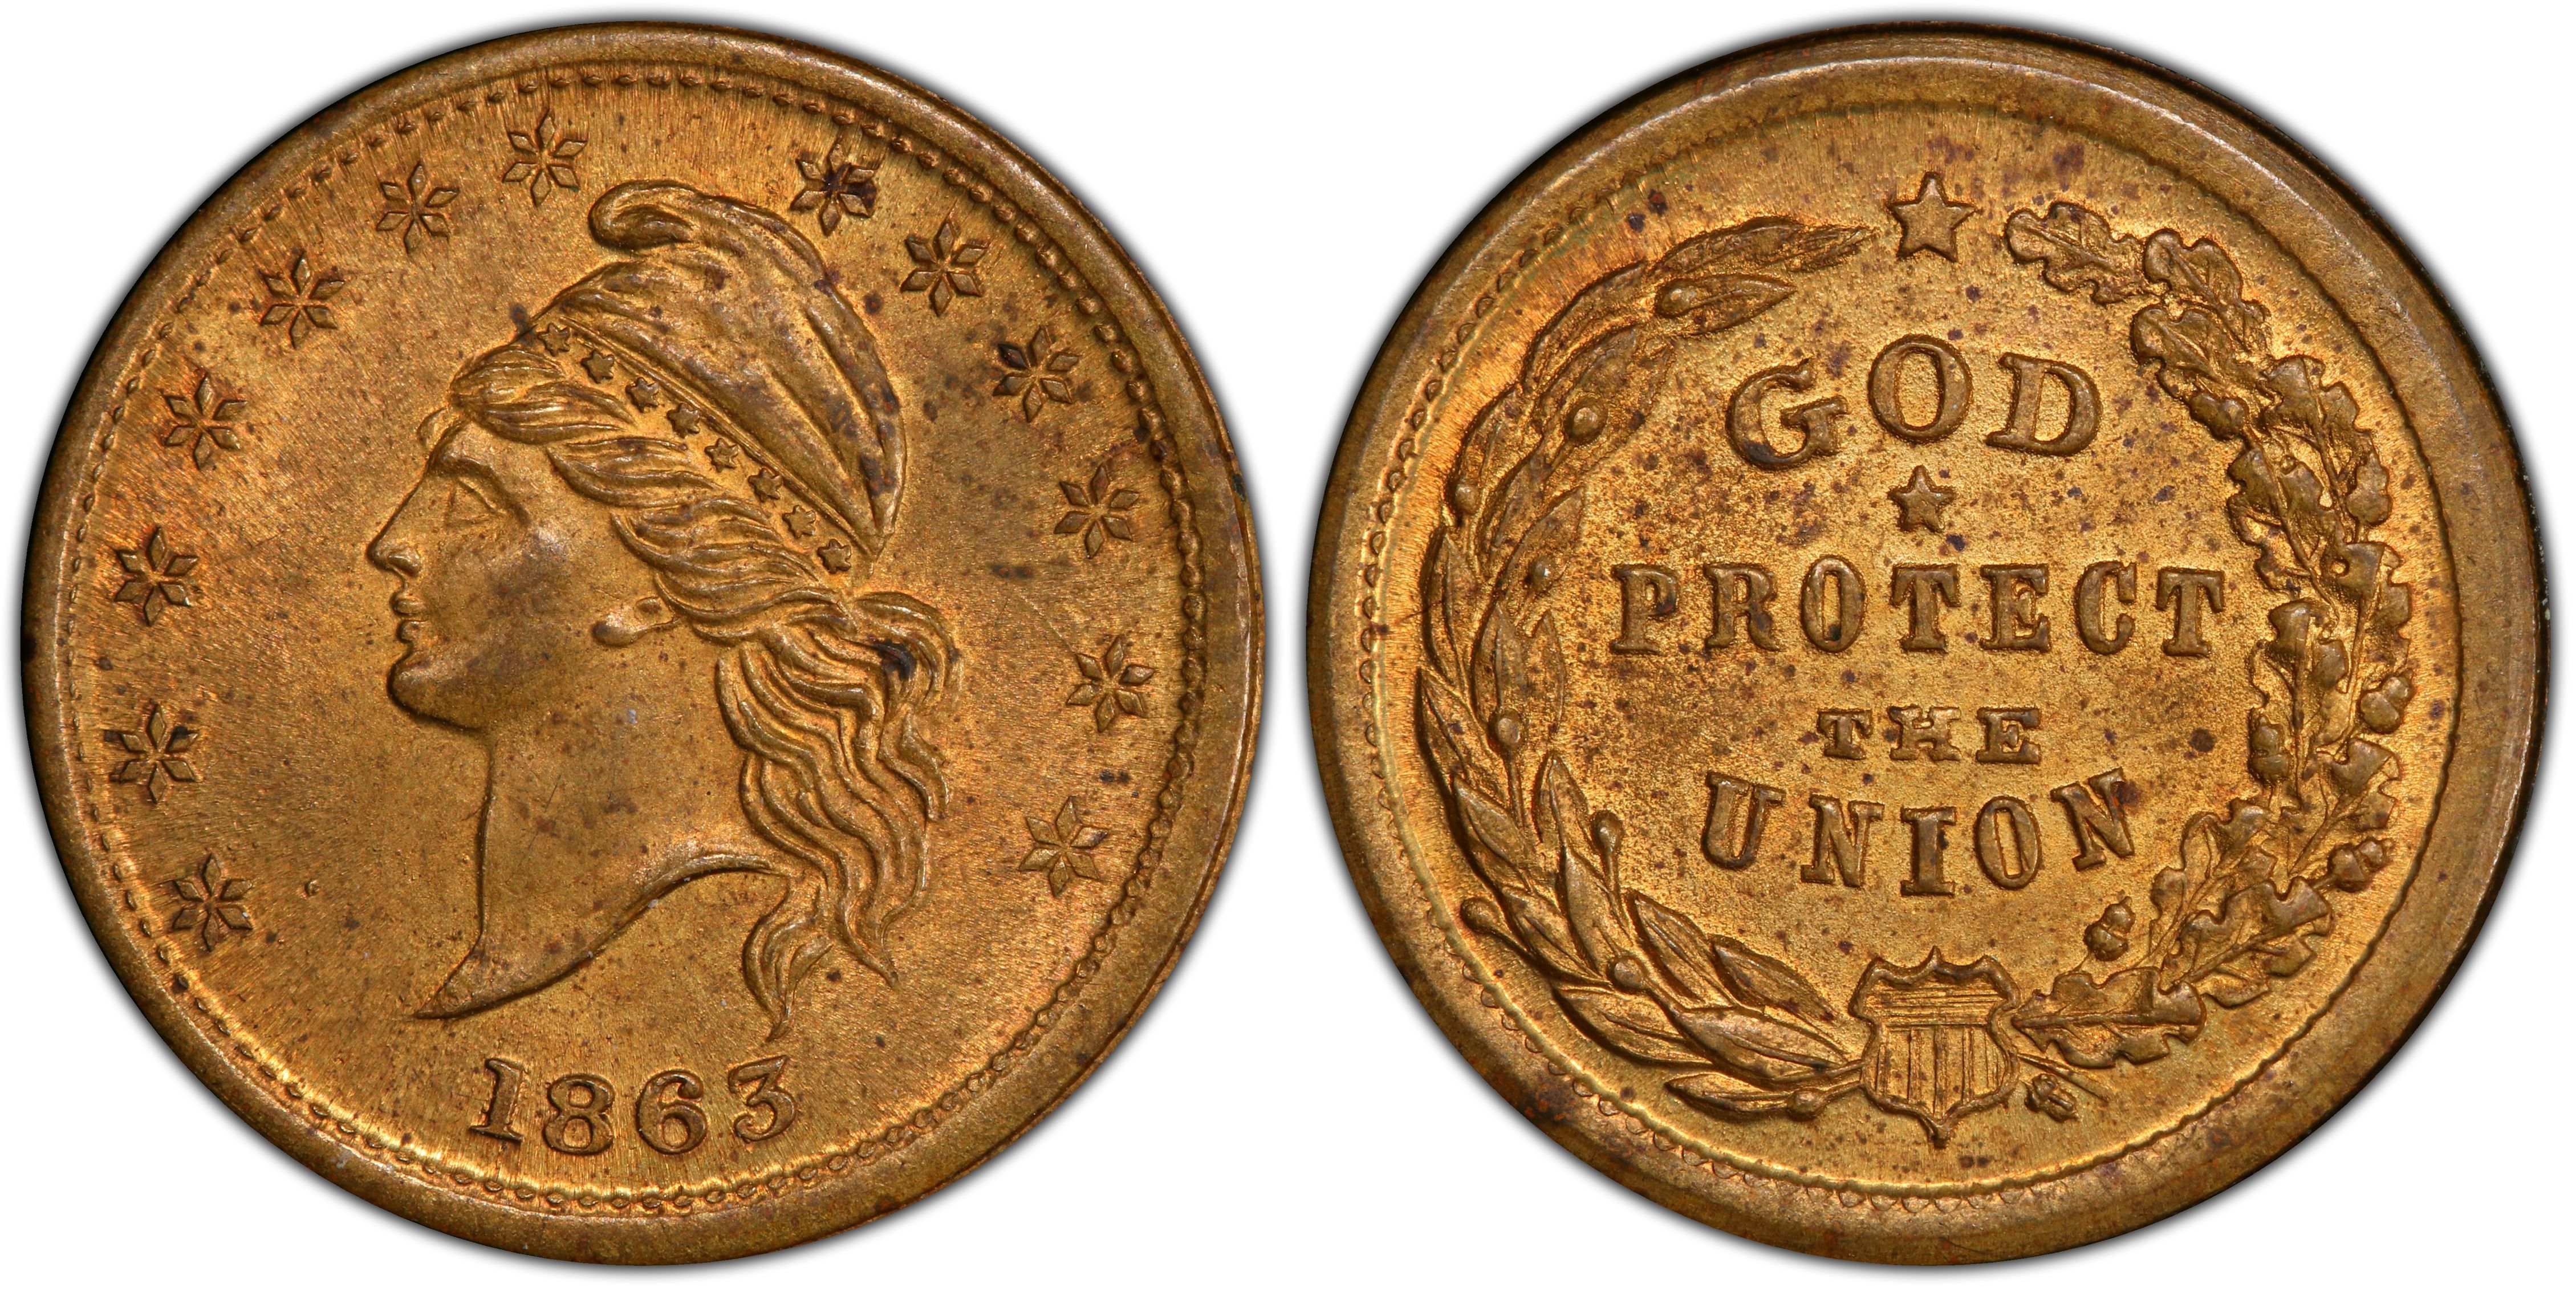 1863 Token F-5/288b Brass God Protect The Union Patriotic (Regular